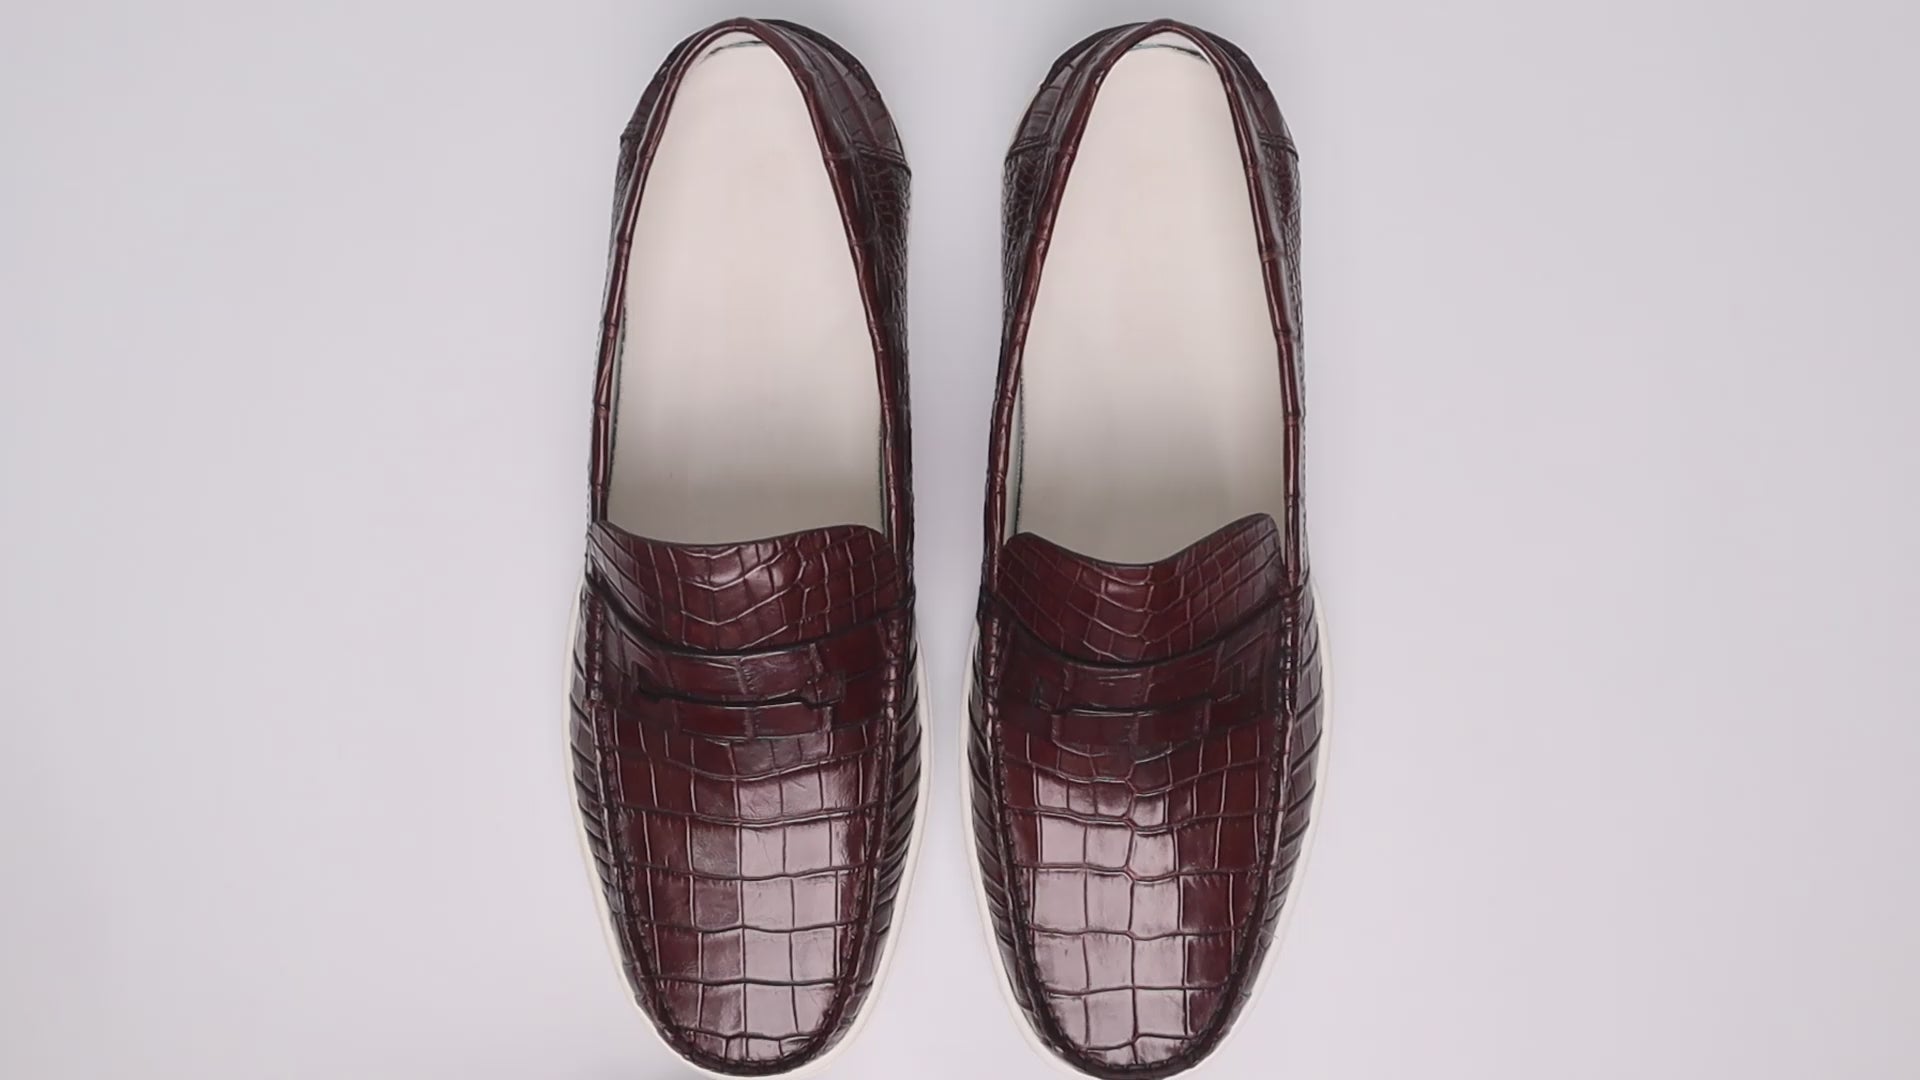 Men's Shoes Genuine Alligator Skin Leather Handmade Alligator Penny Loafers Driving Shoes Slip-On